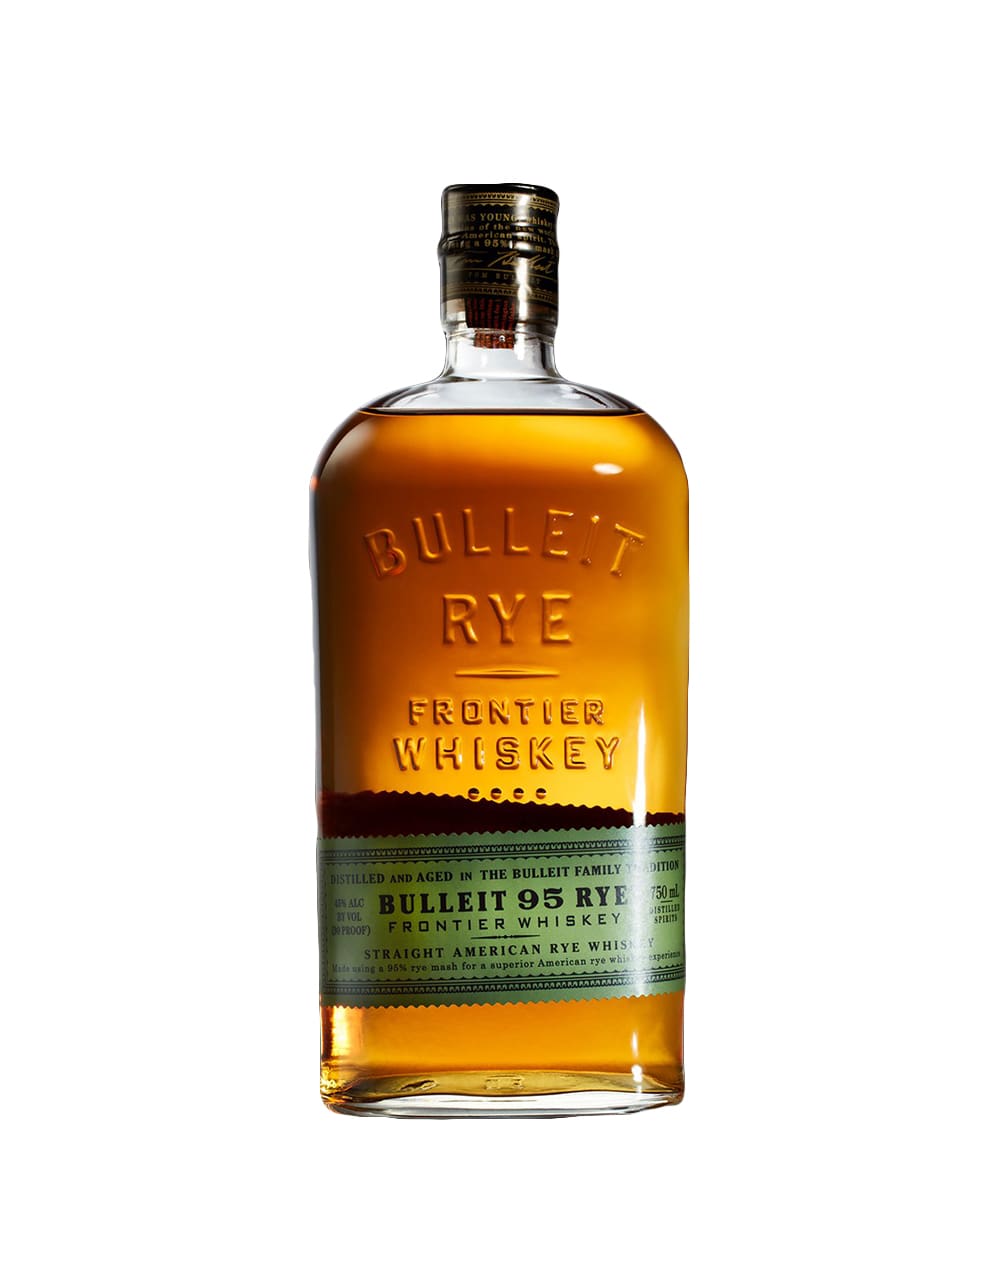 Bulleit 95 Rye Whiskey 1.75L